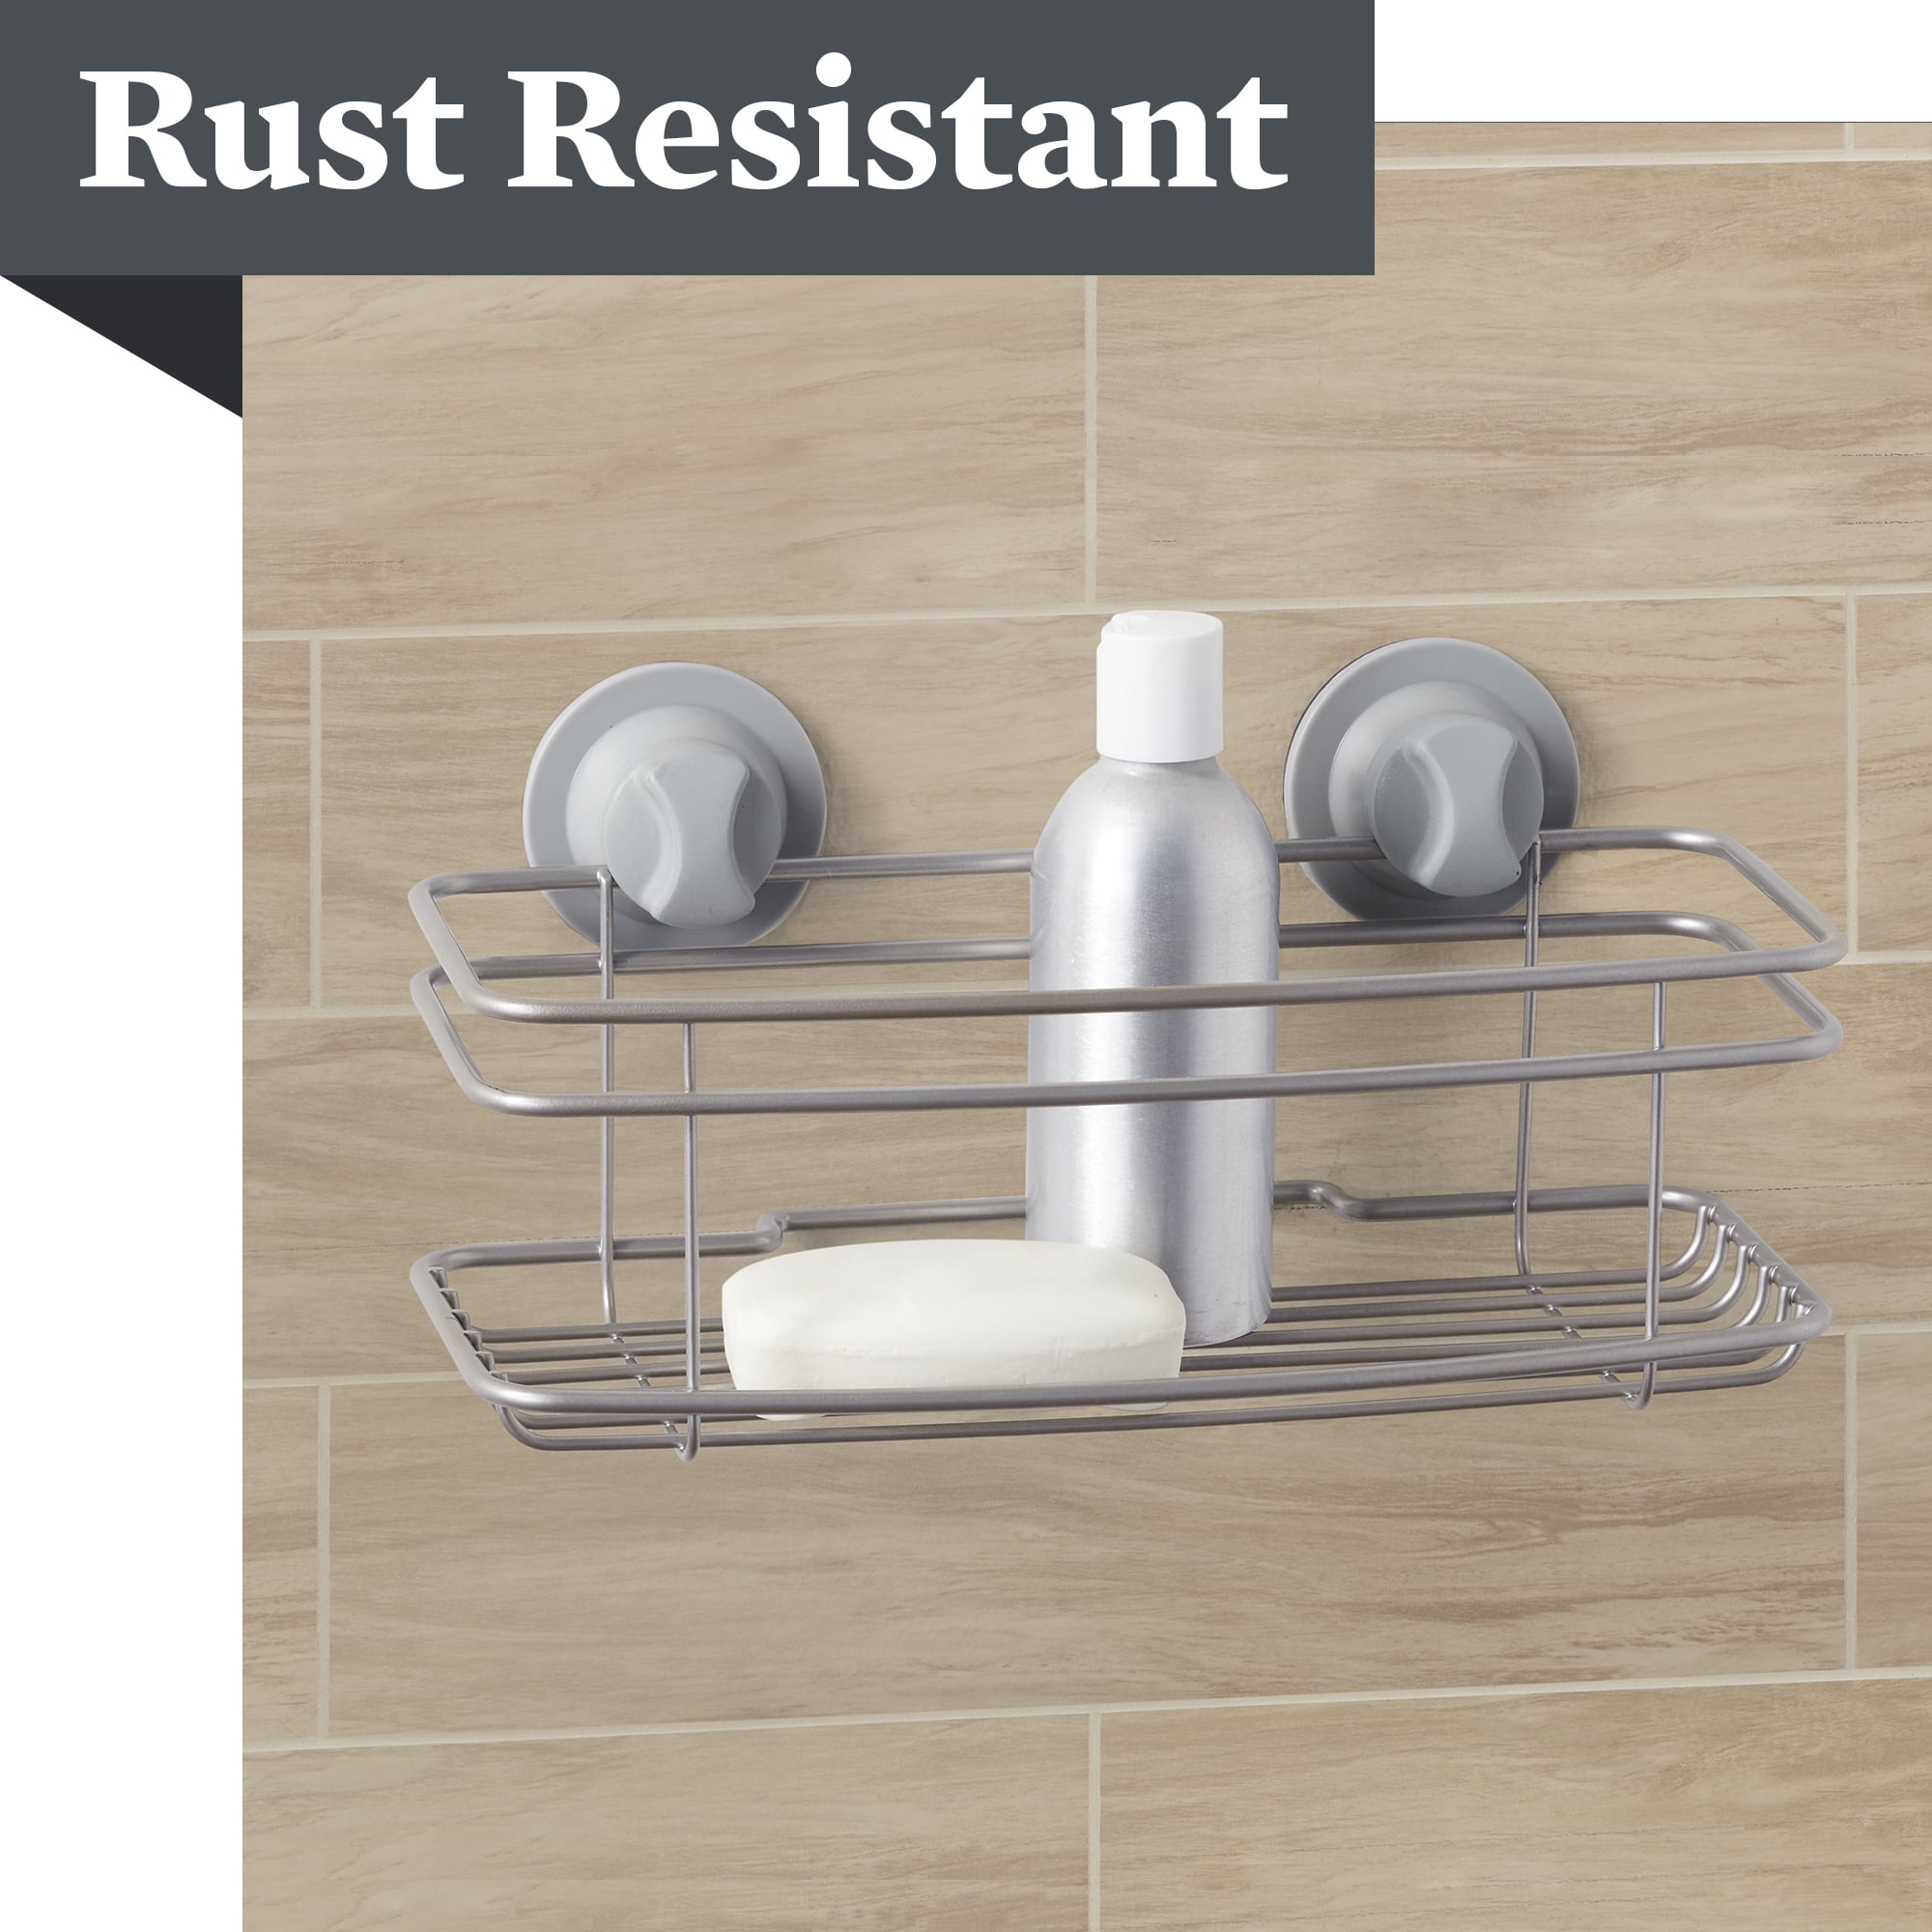 Satin Nickel Shower Basket, Better Homes & Gardens Rust-Resistant Power Grip Pro, 1 Shelf, Suction or Adhesive Mount